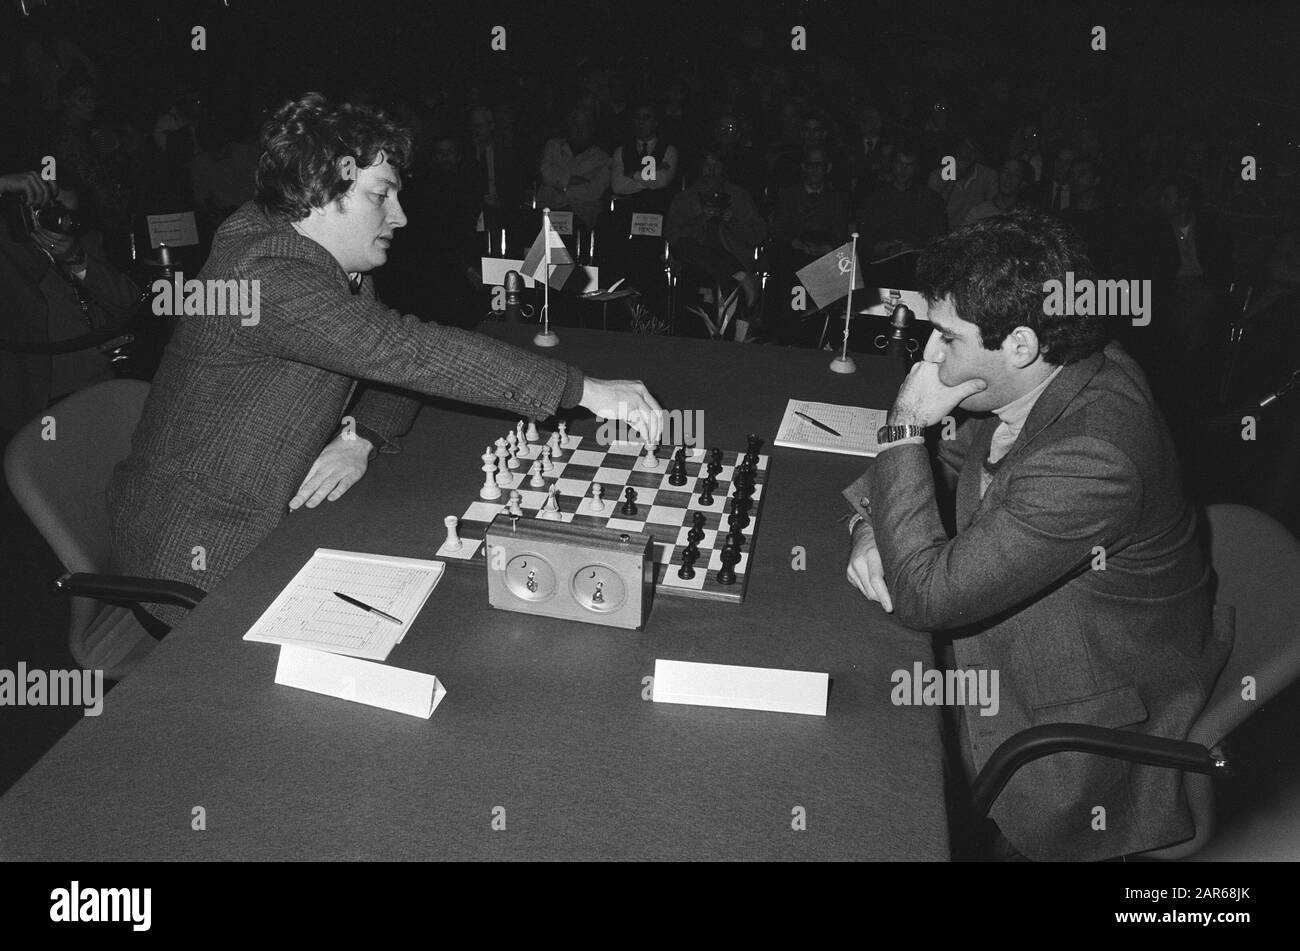 KRO Chesstwekamp Timman - Kasparov 1985 Timman (left) and Kasparov